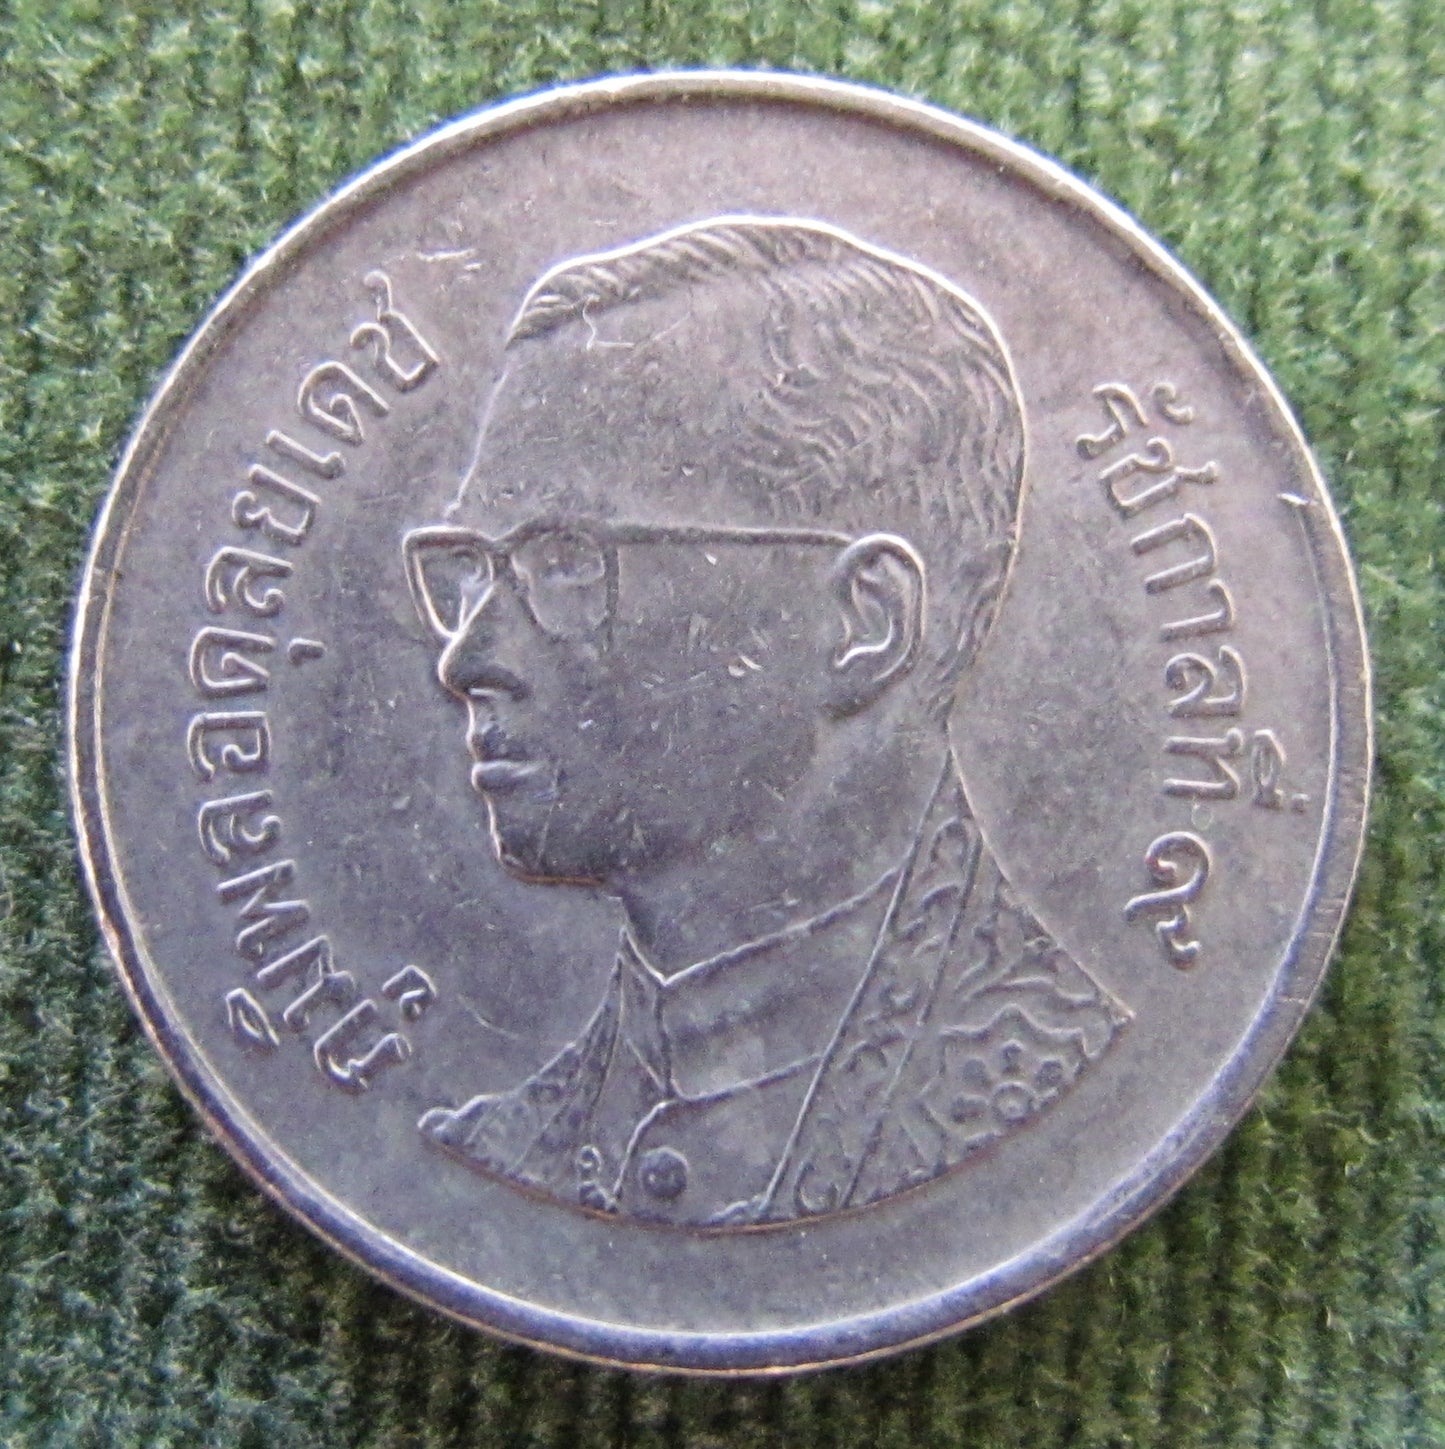 Thailand 2001 1 Baht King Rama IX Coin - Circulated